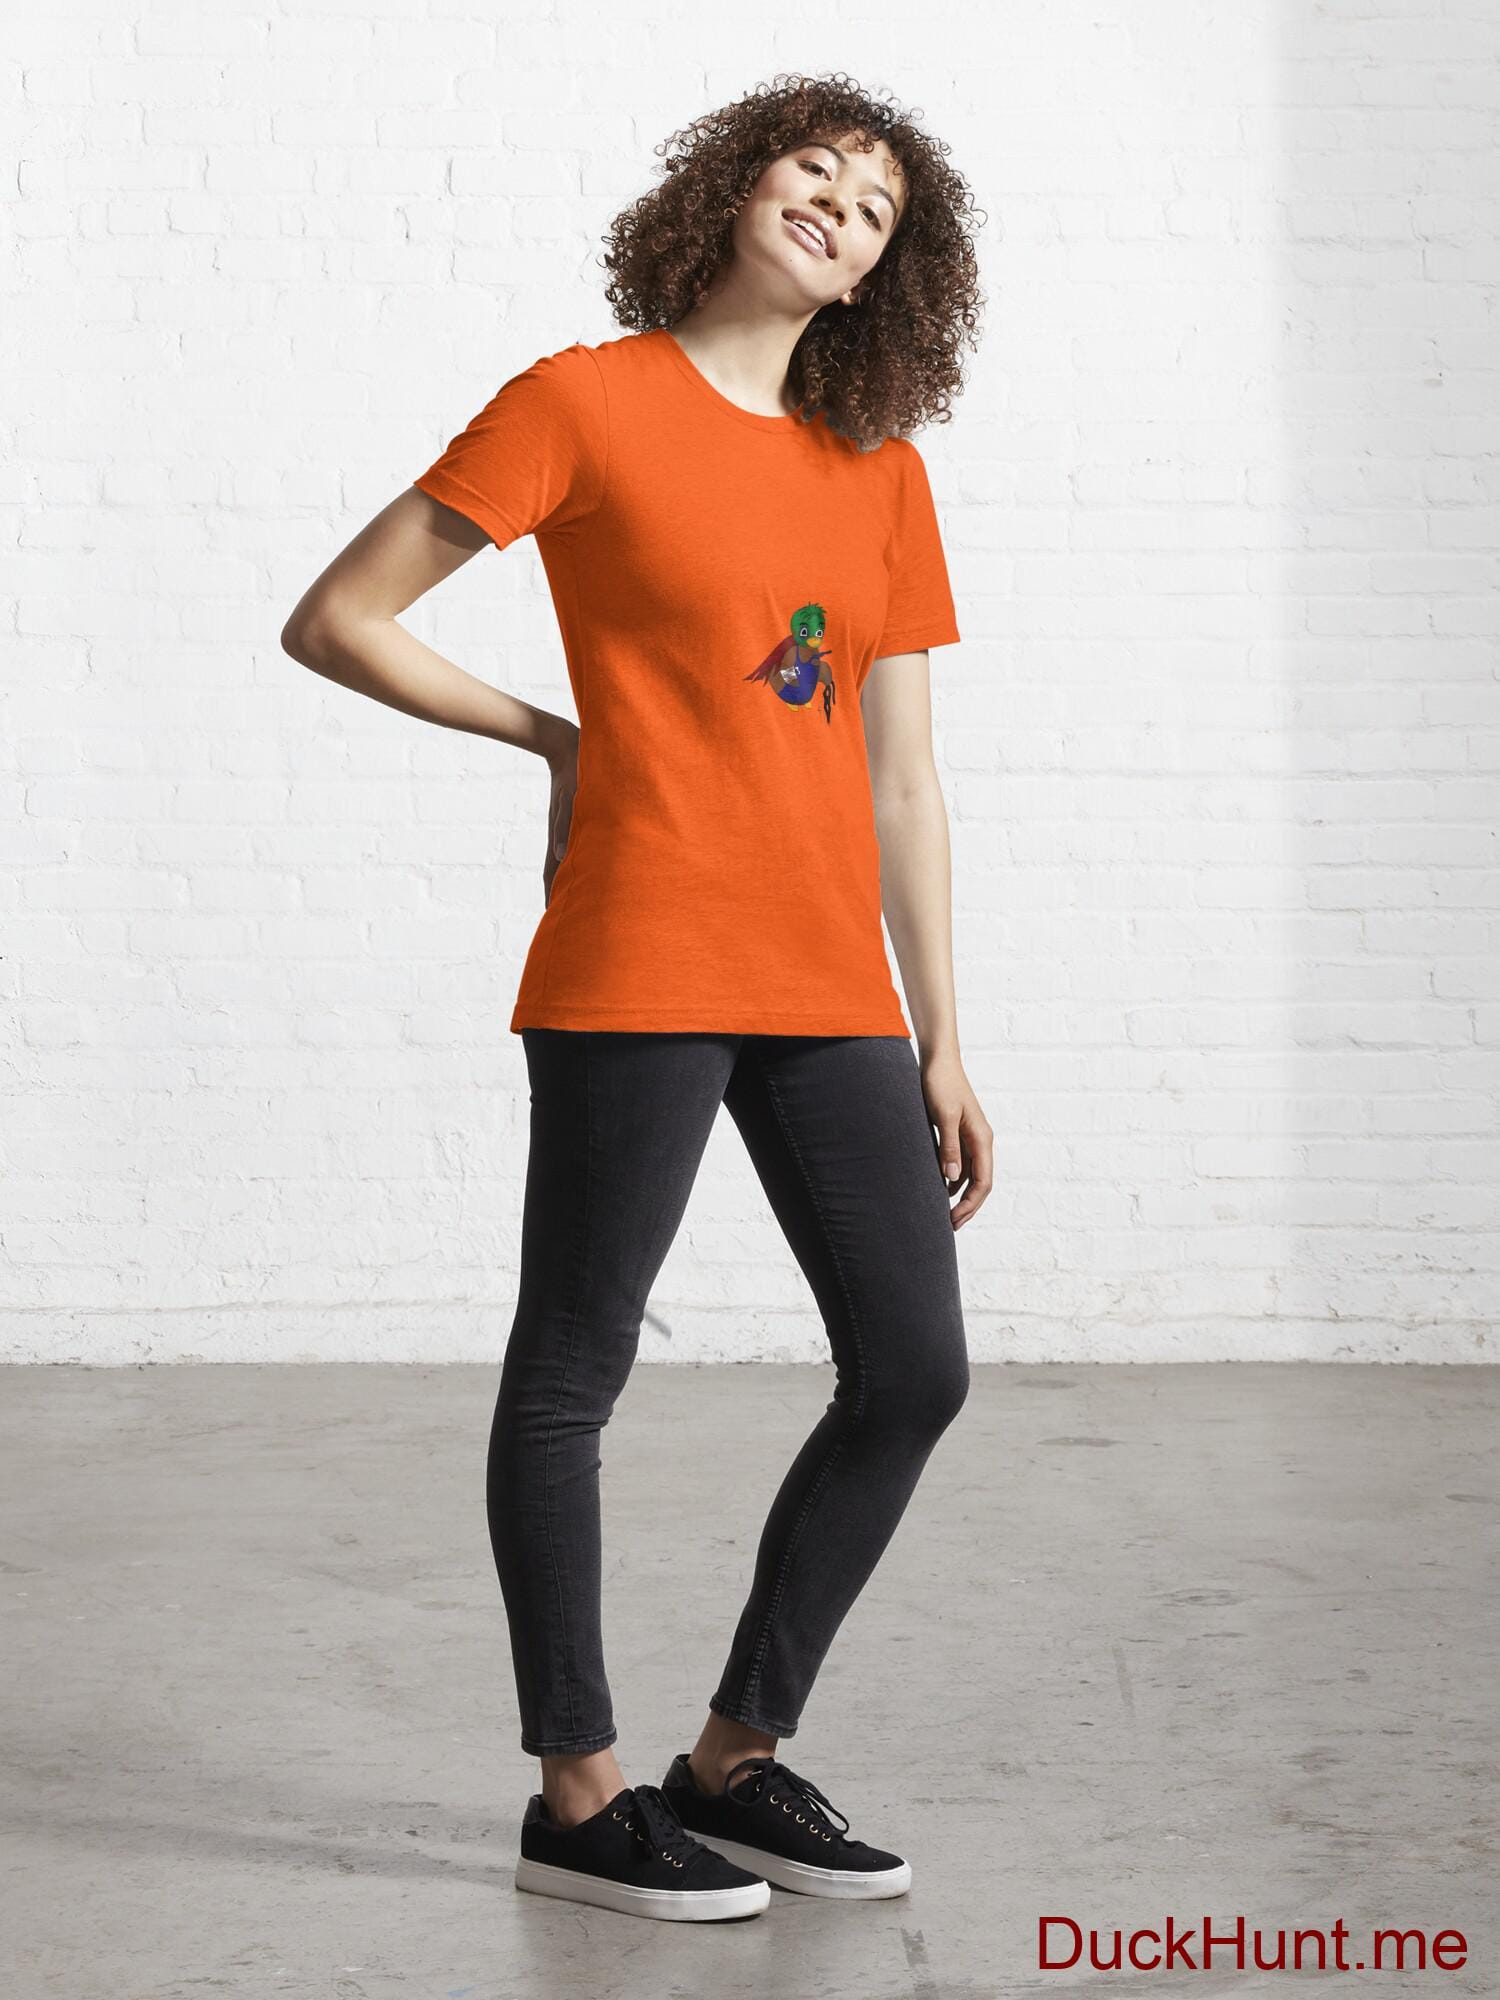 Dead DuckHunt Boss (smokeless) Orange Essential T-Shirt (Front printed) alternative image 3